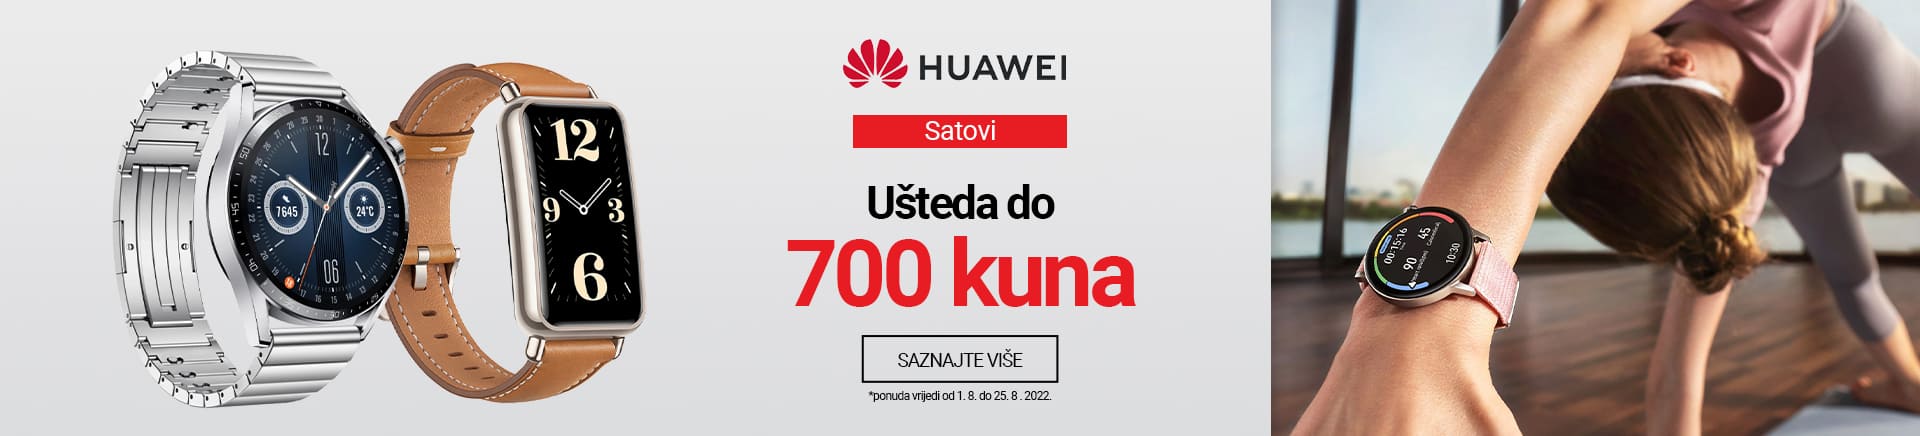 Huawei  satovi ušteda do 700 kn